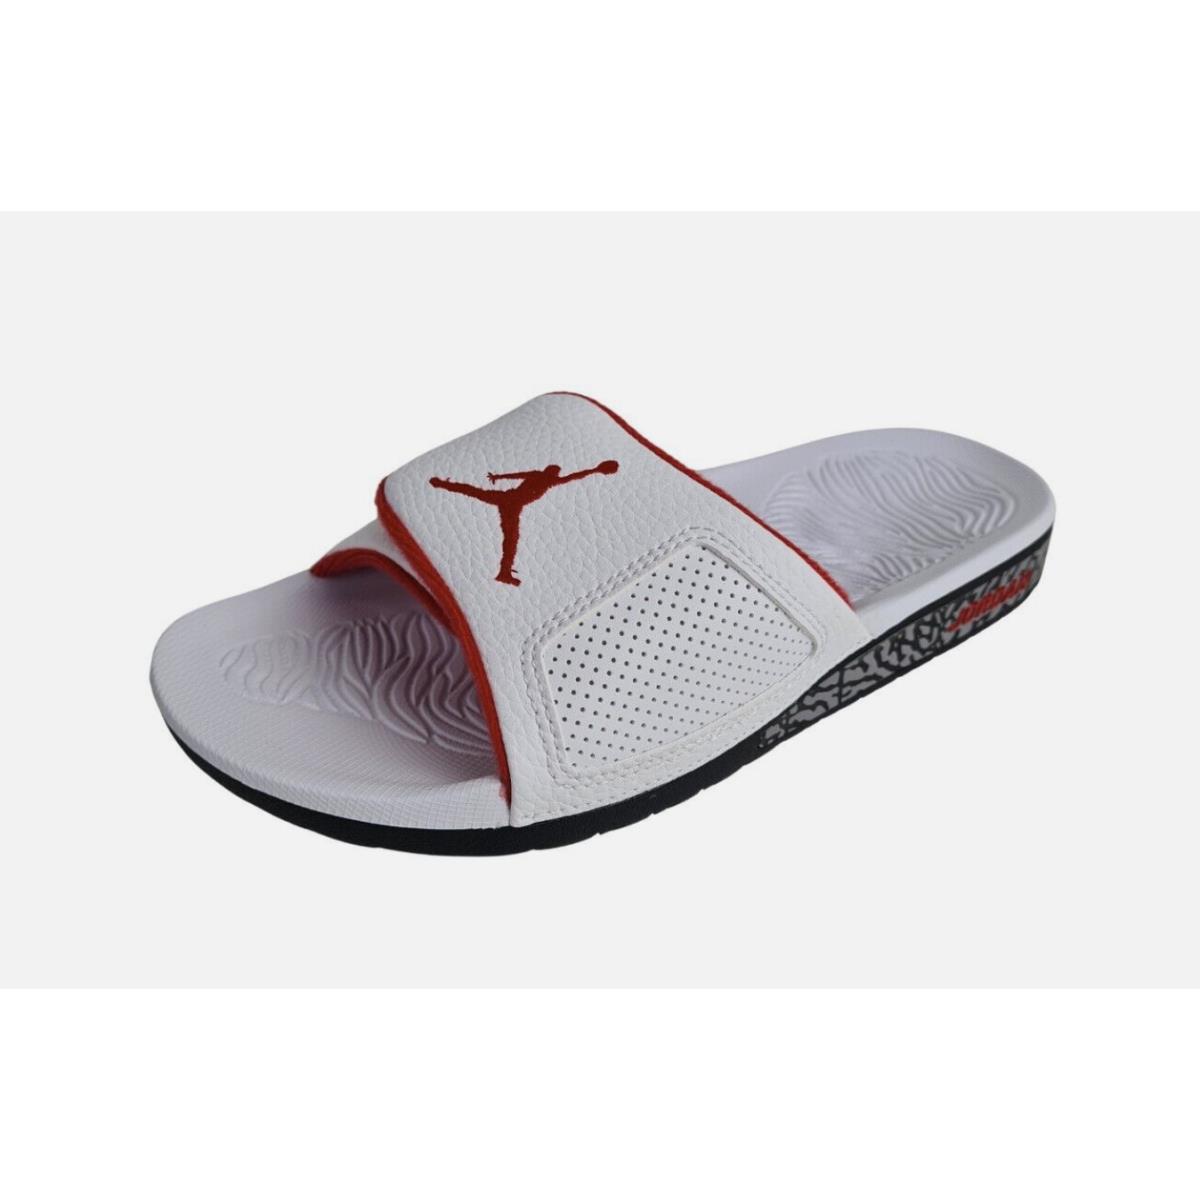 Nike Jordan Hydro 3 Retro Slides White University Red Sandals 854556 103 SZ 10